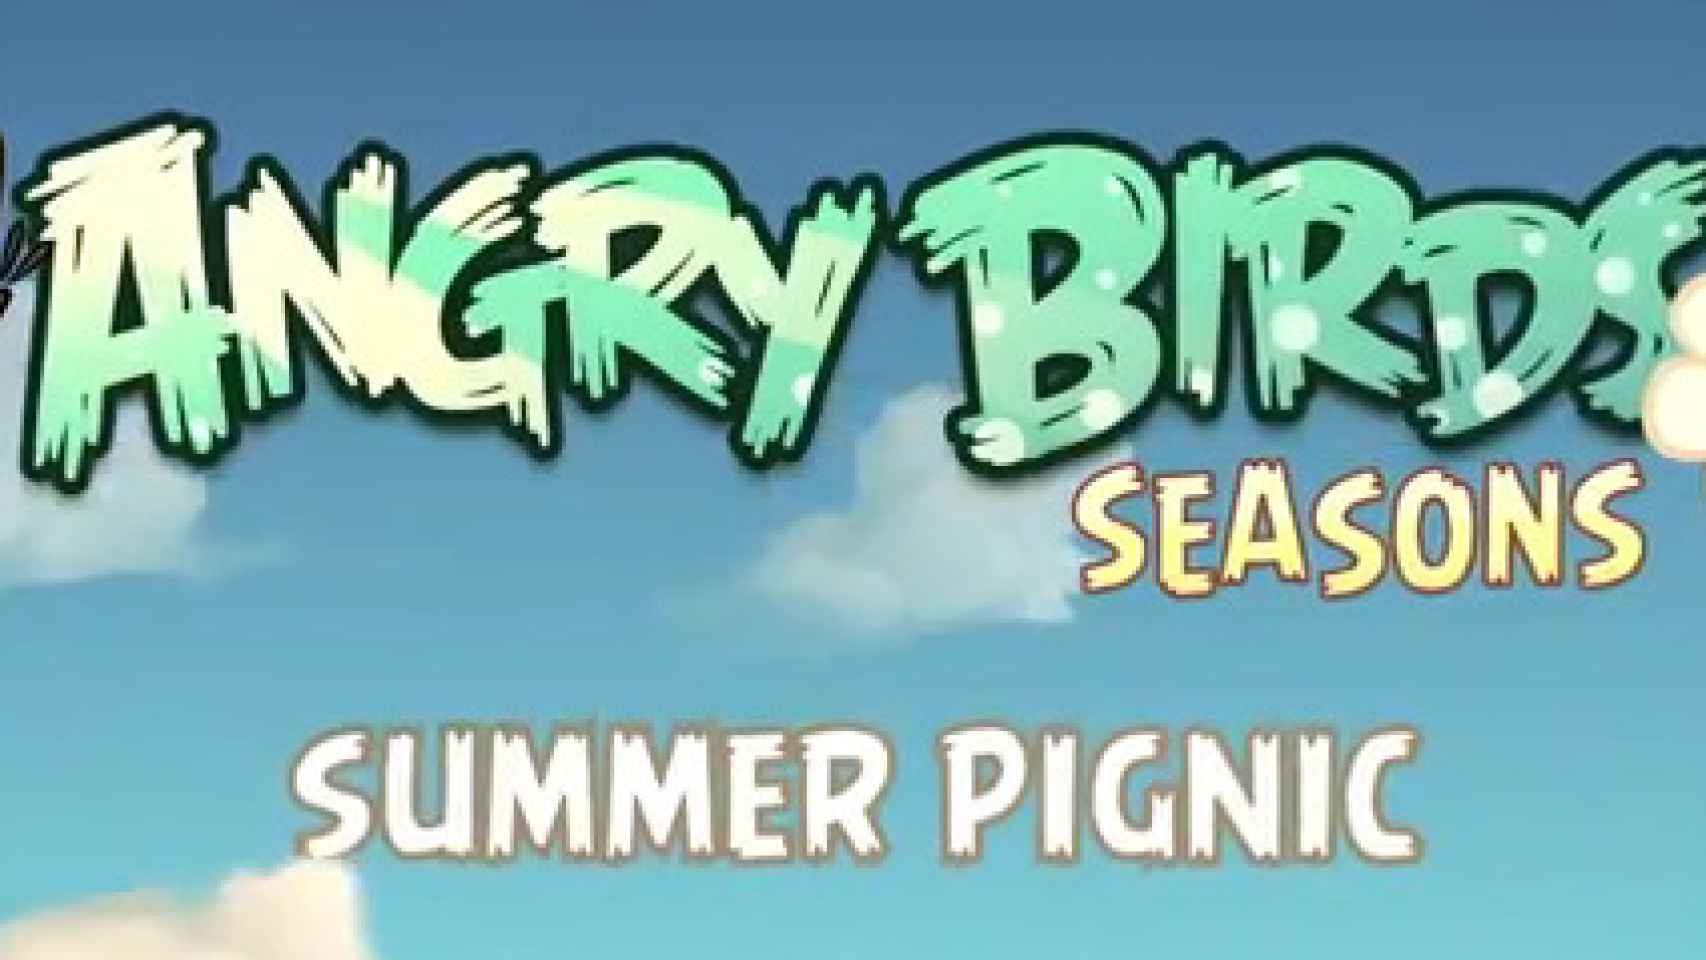 Nuevo Angry Birds Summer Pignic